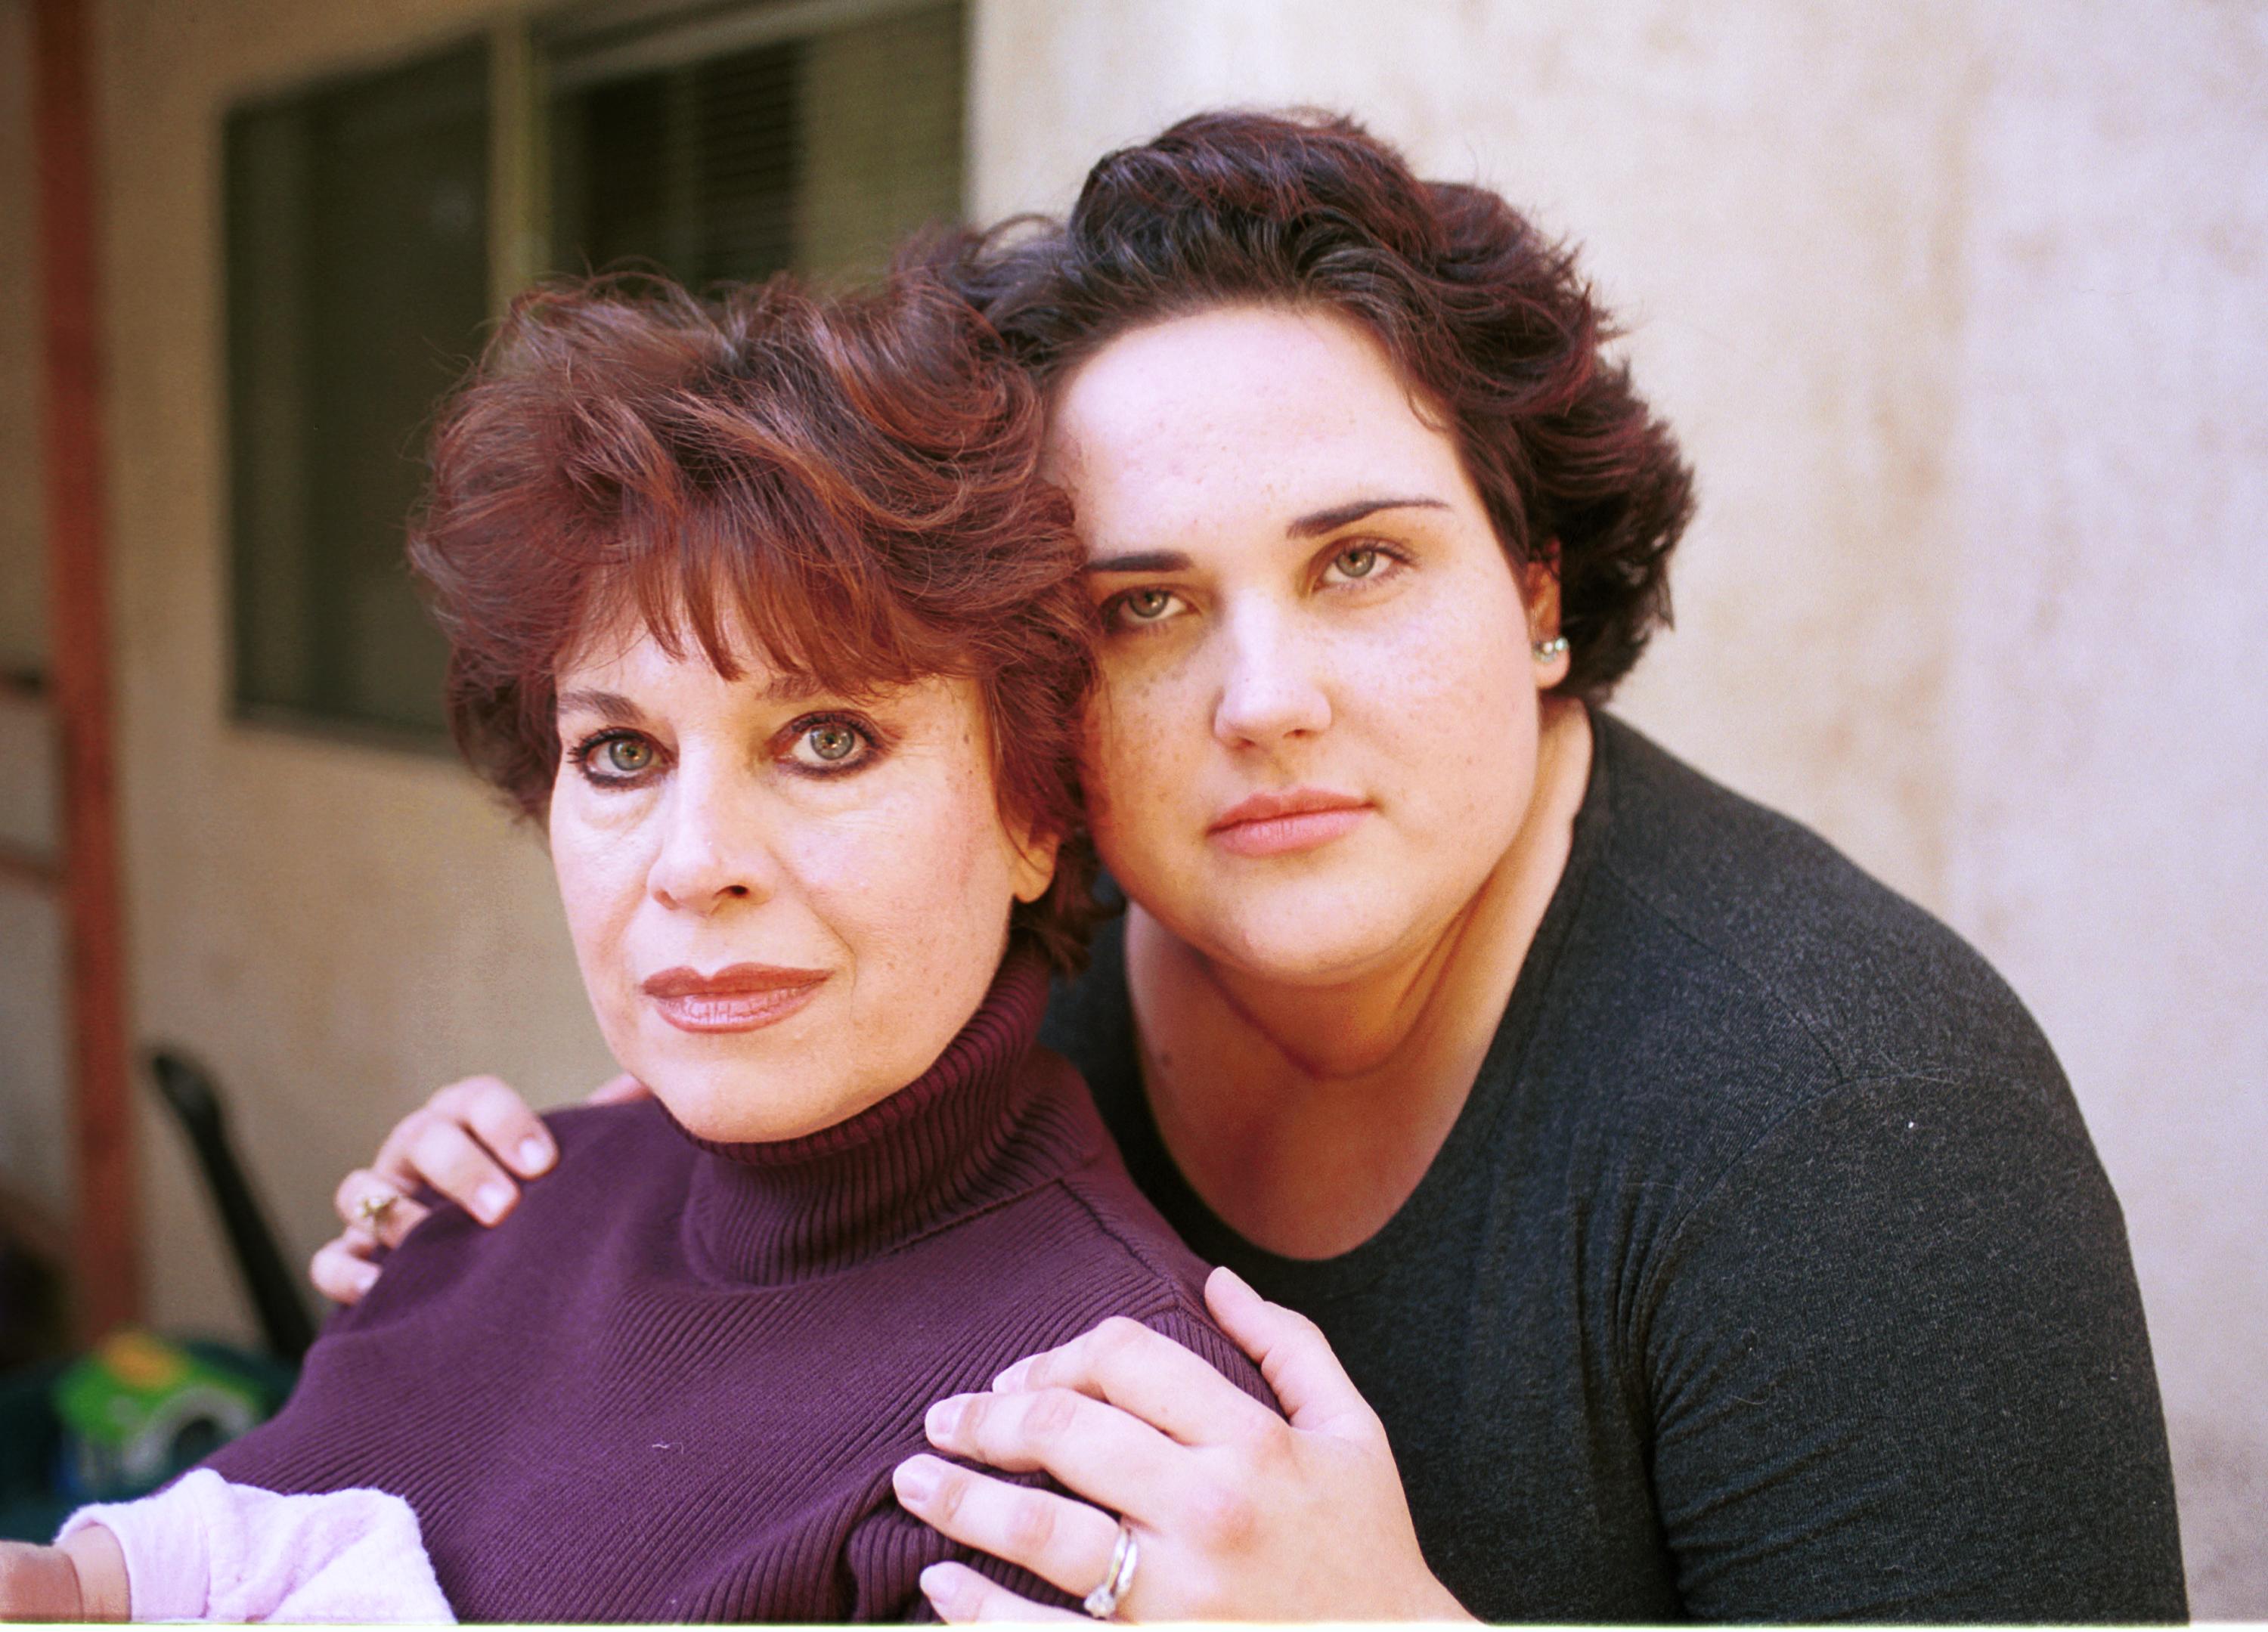 Lana Wood and Evan Taylor Maldonado in Thousand Oaks, Kalifornien, am 28. September 2000. | Quelle: Getty Images